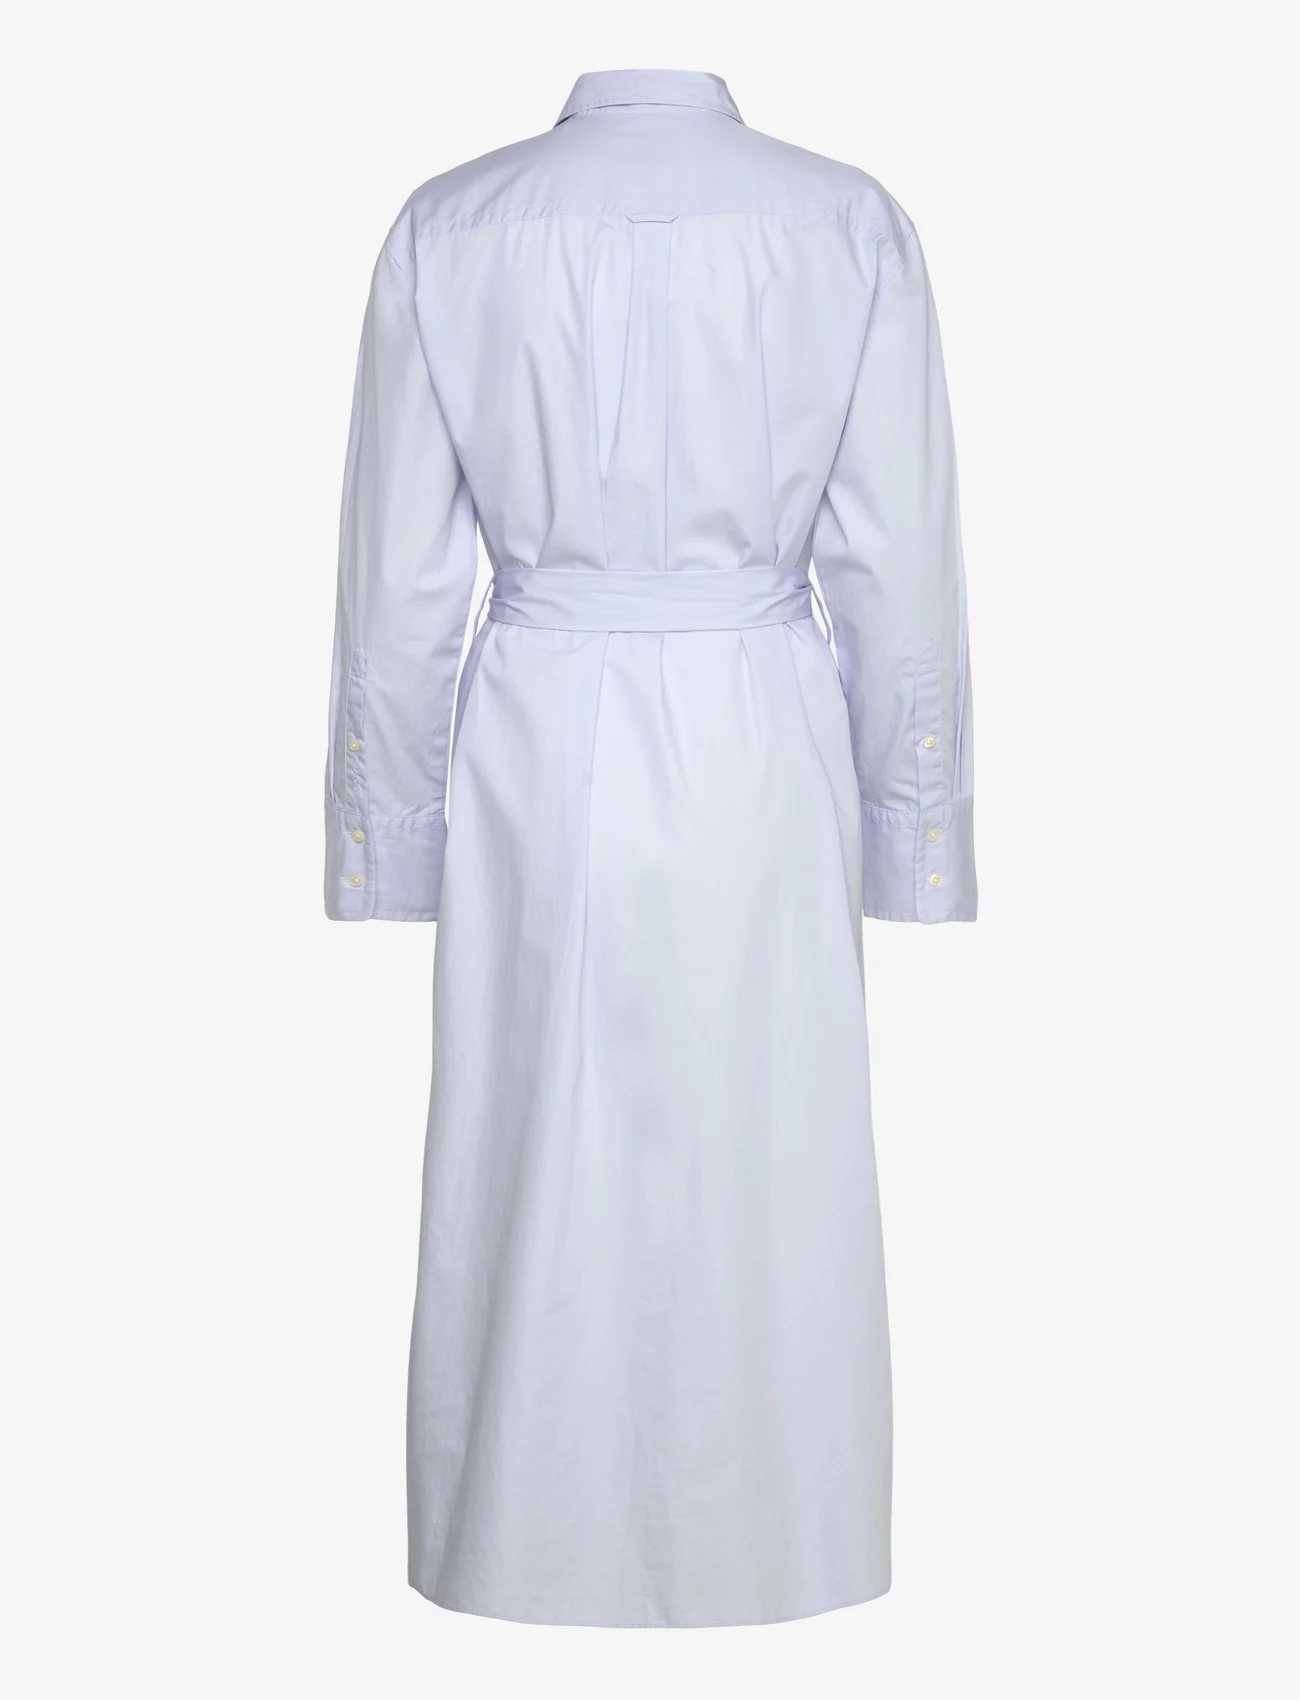 GANT - REL POPLIN SHIRT DRESS - shirt dresses - light blue - 1